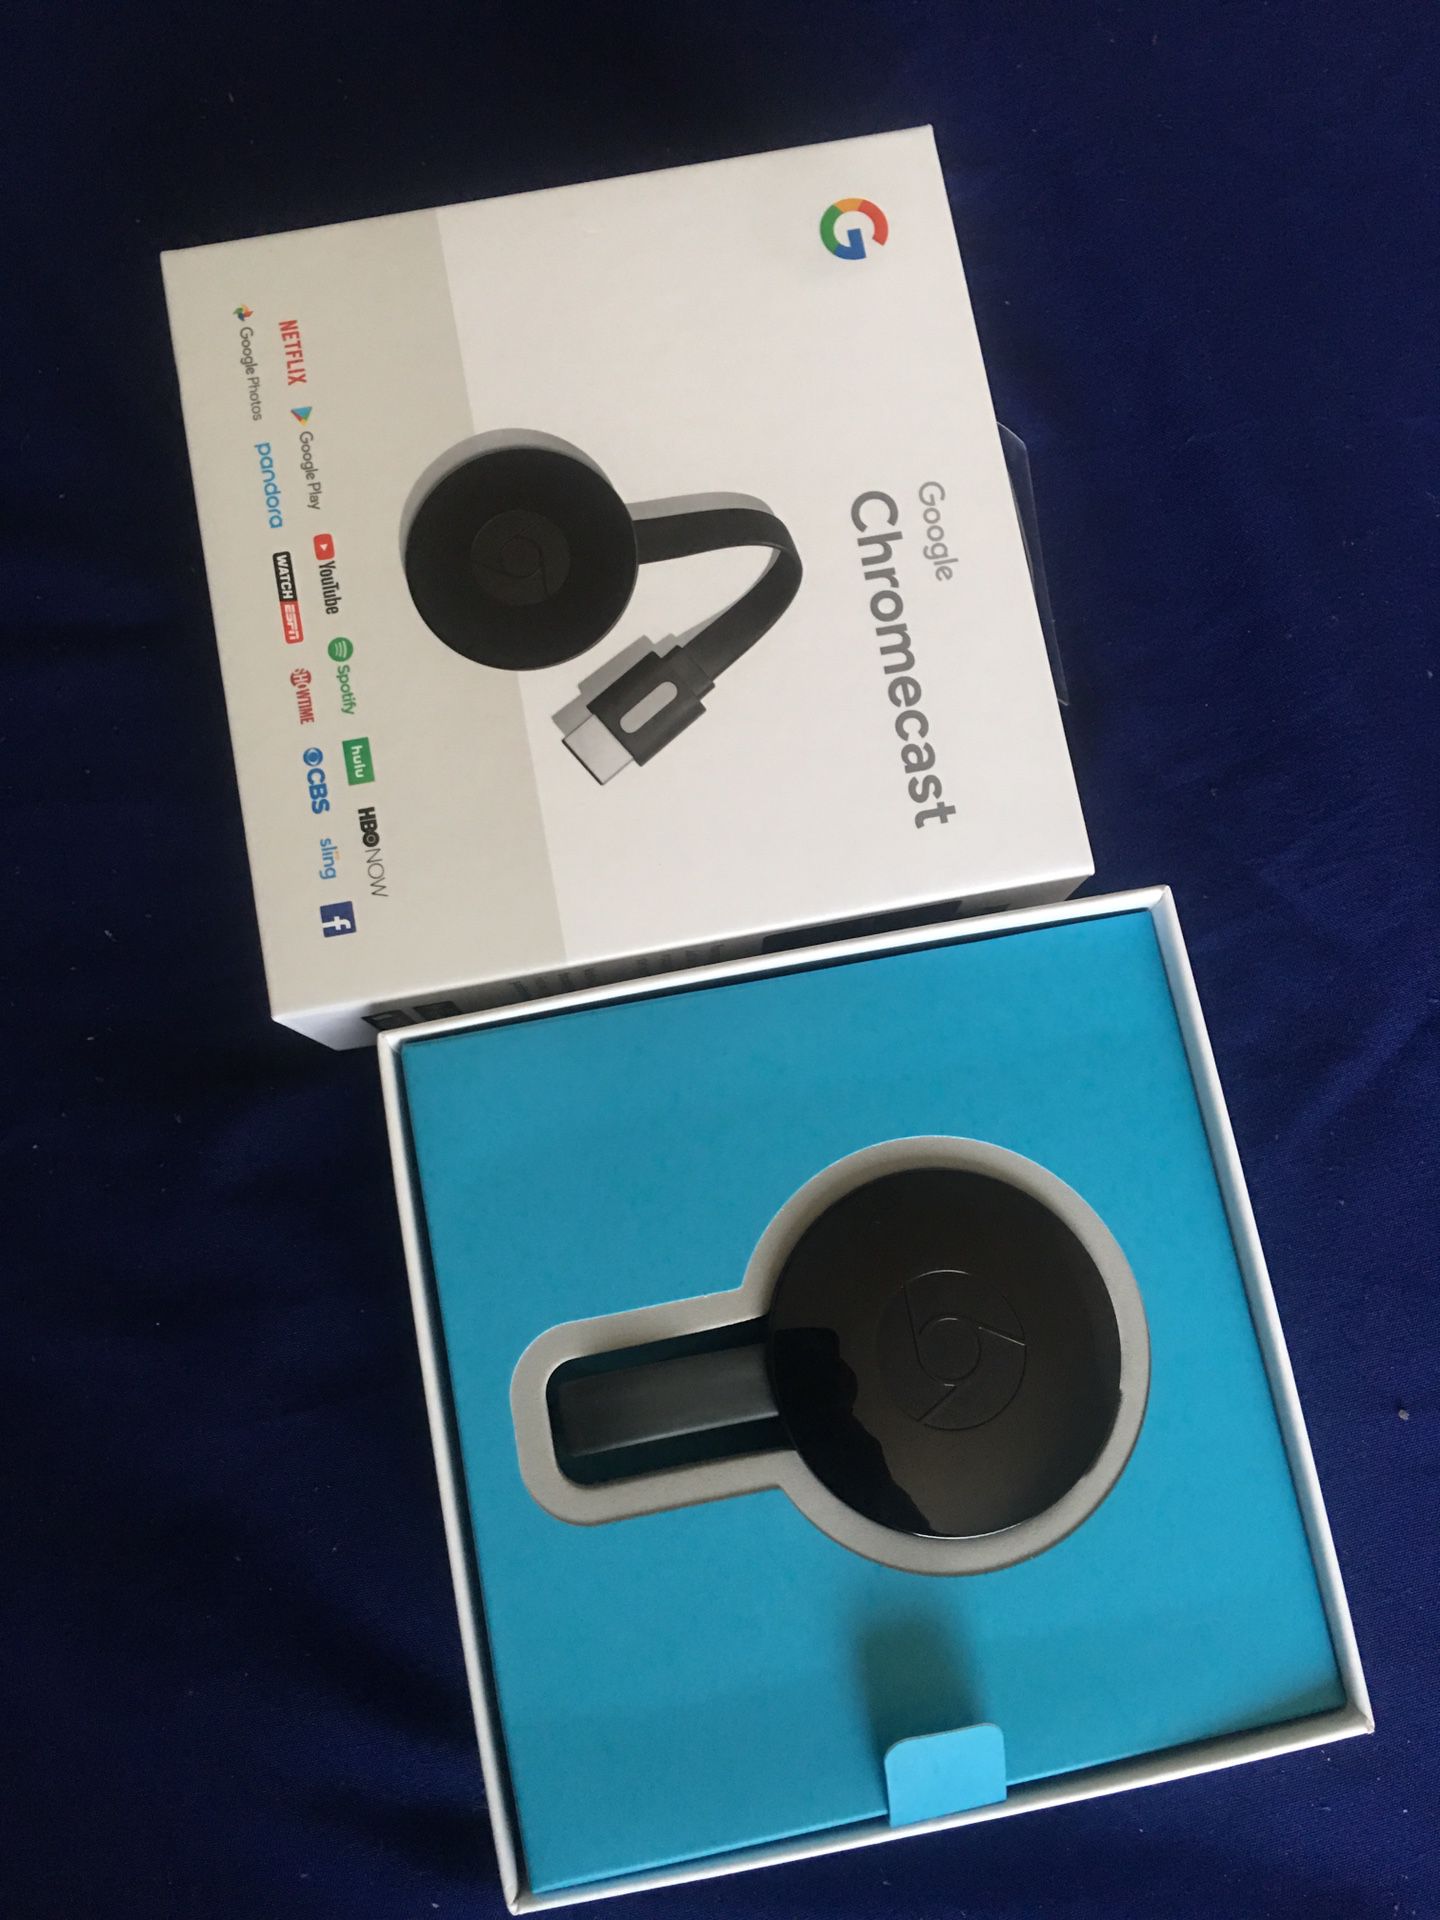 Google Chromecast - Brand New just open the box